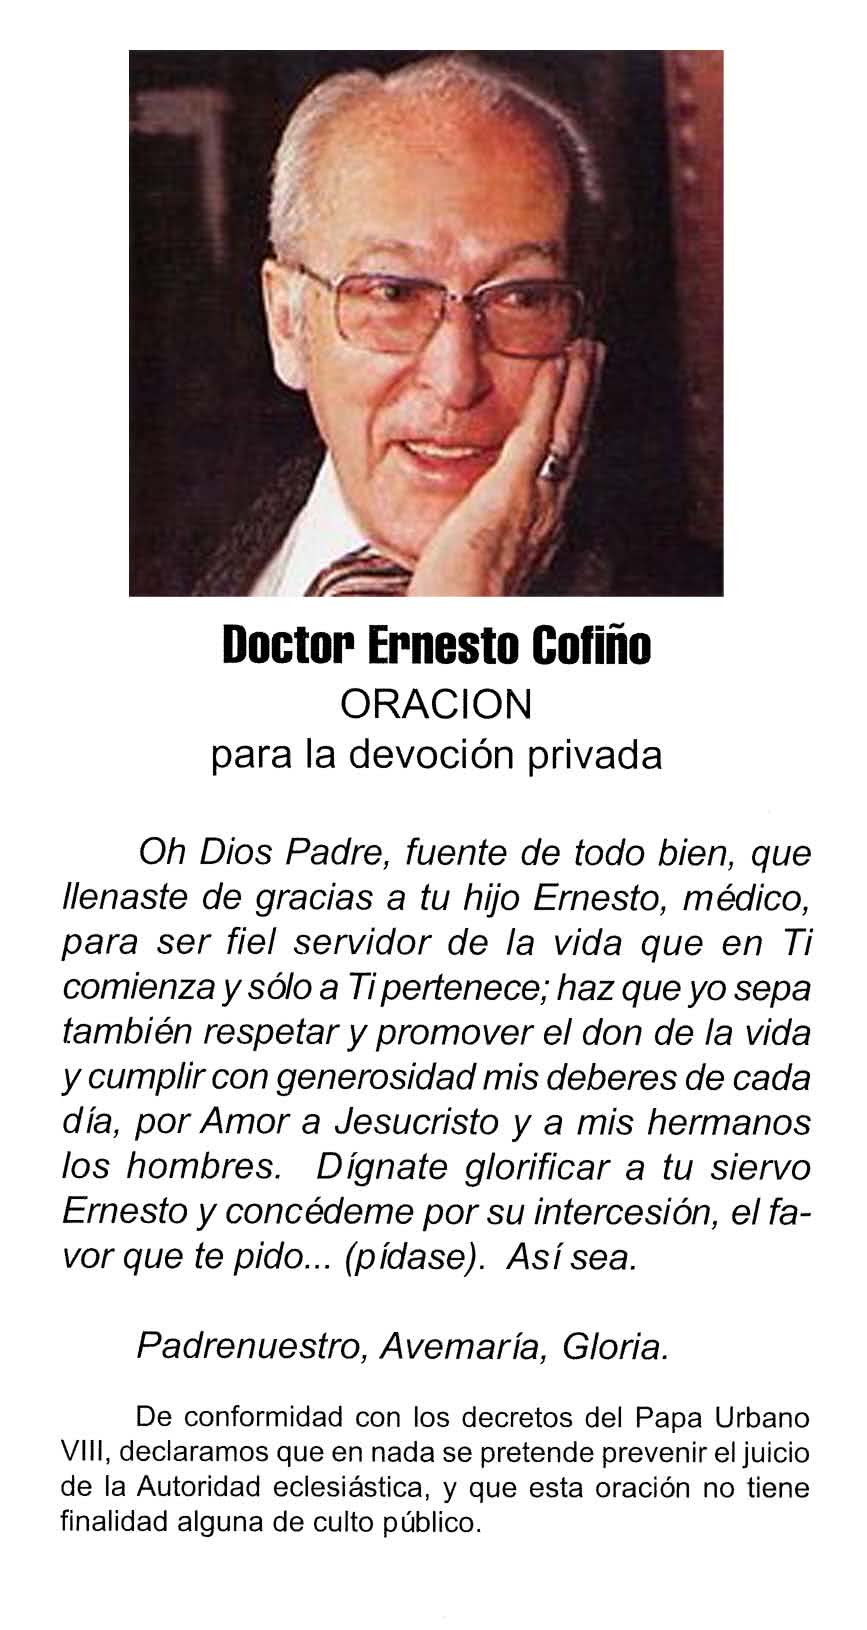 Vivir de cara a Dios Hoy, un programa sobre el Dr. Ernesto Cofiño